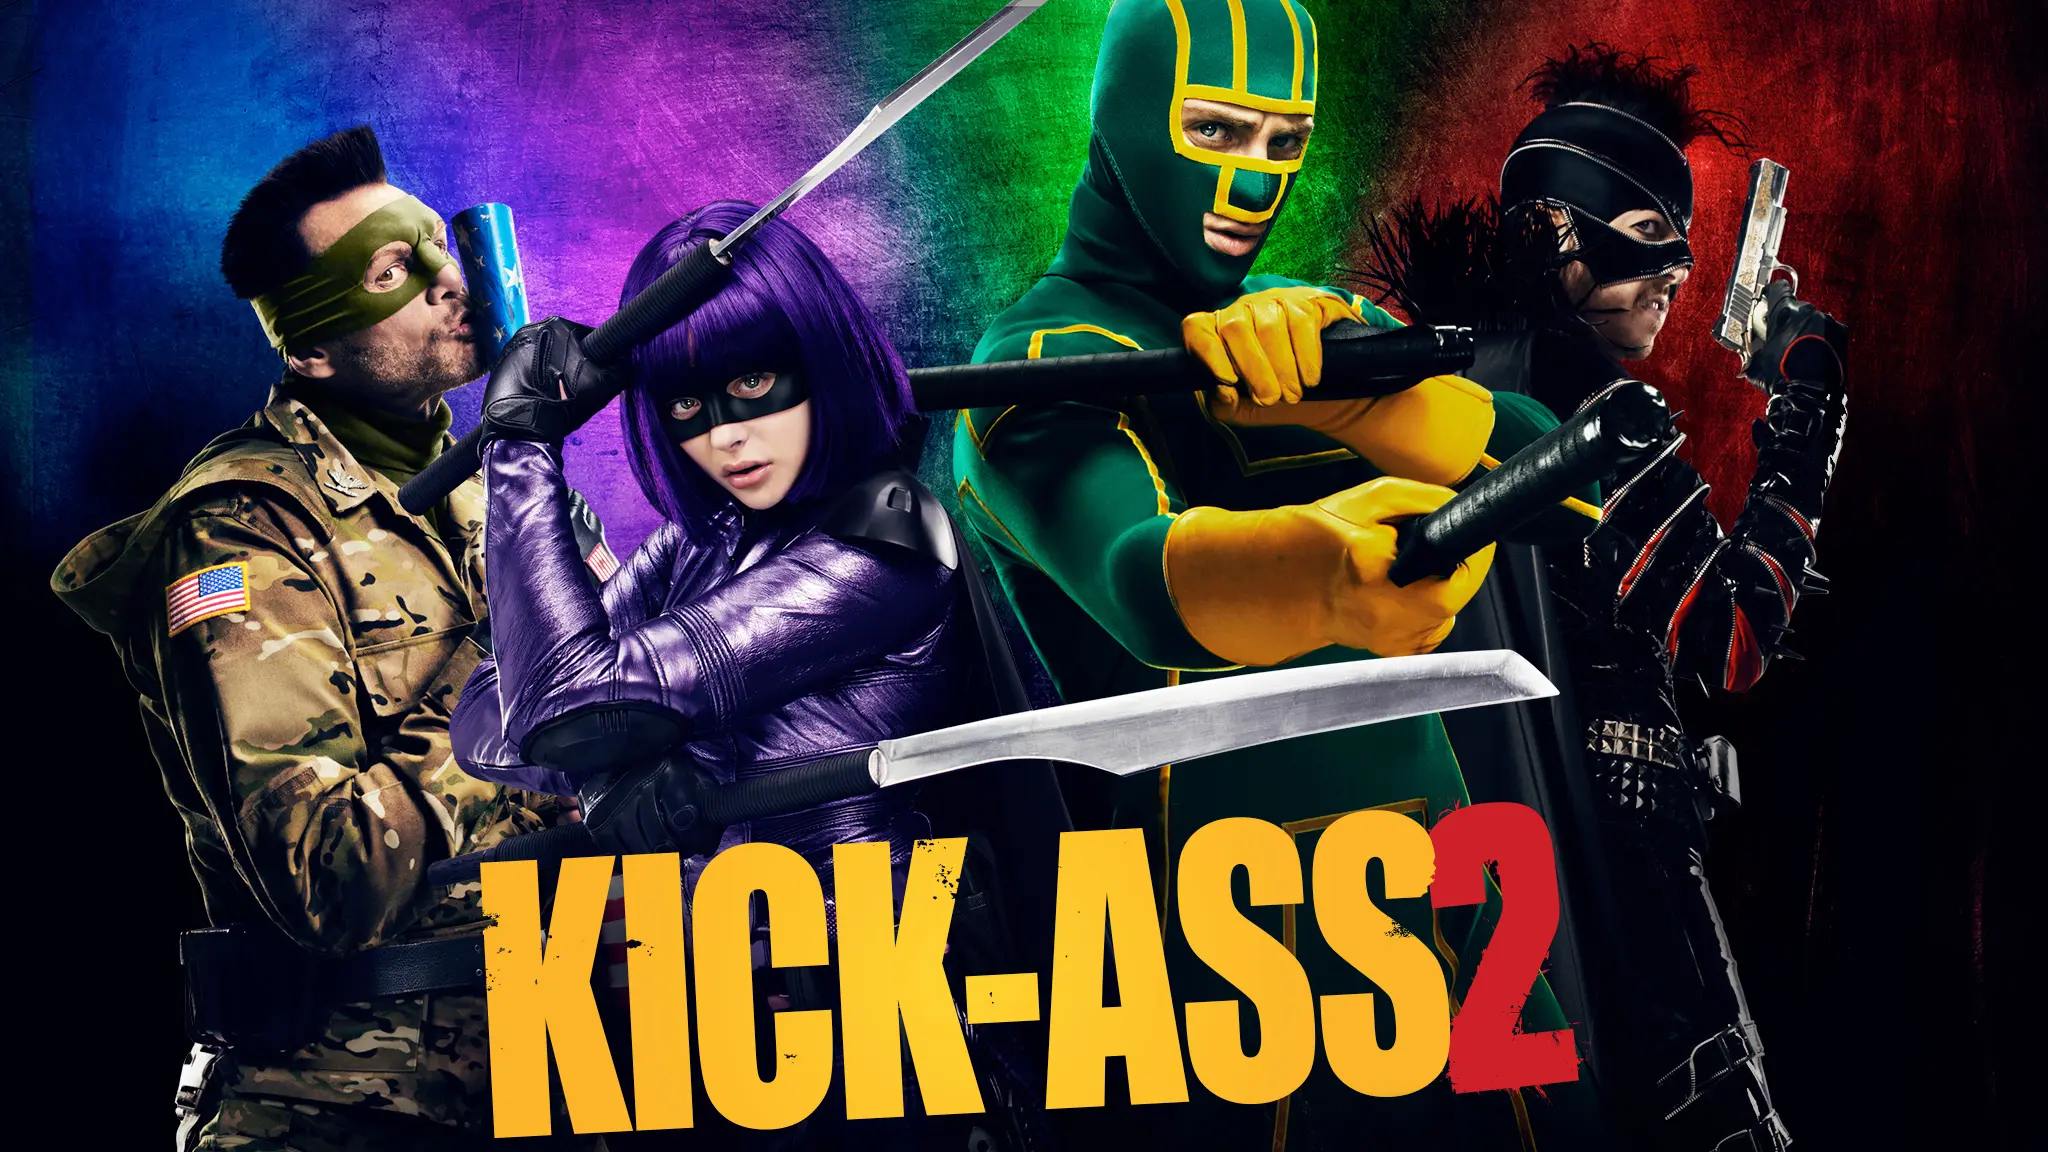 Movie Kick Ass 2 wallpaper 2 | Background Image